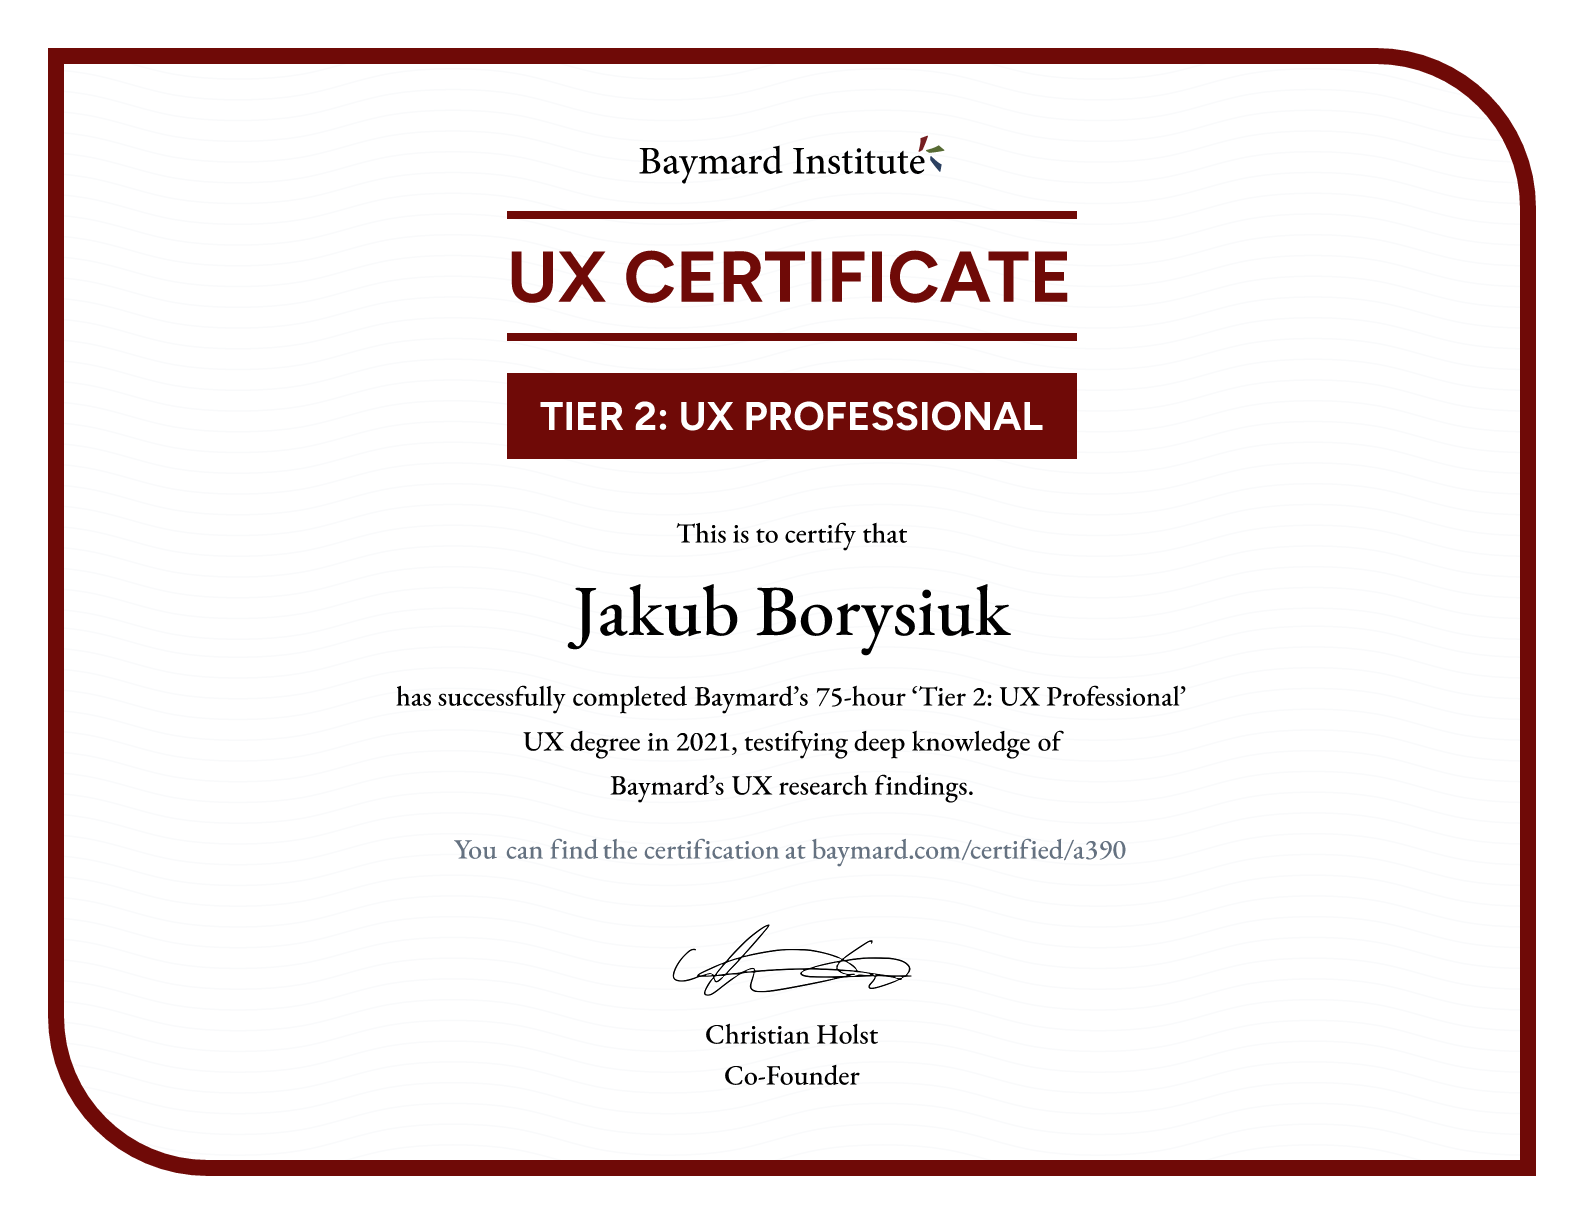 Jakub Borysiuk’s certificate